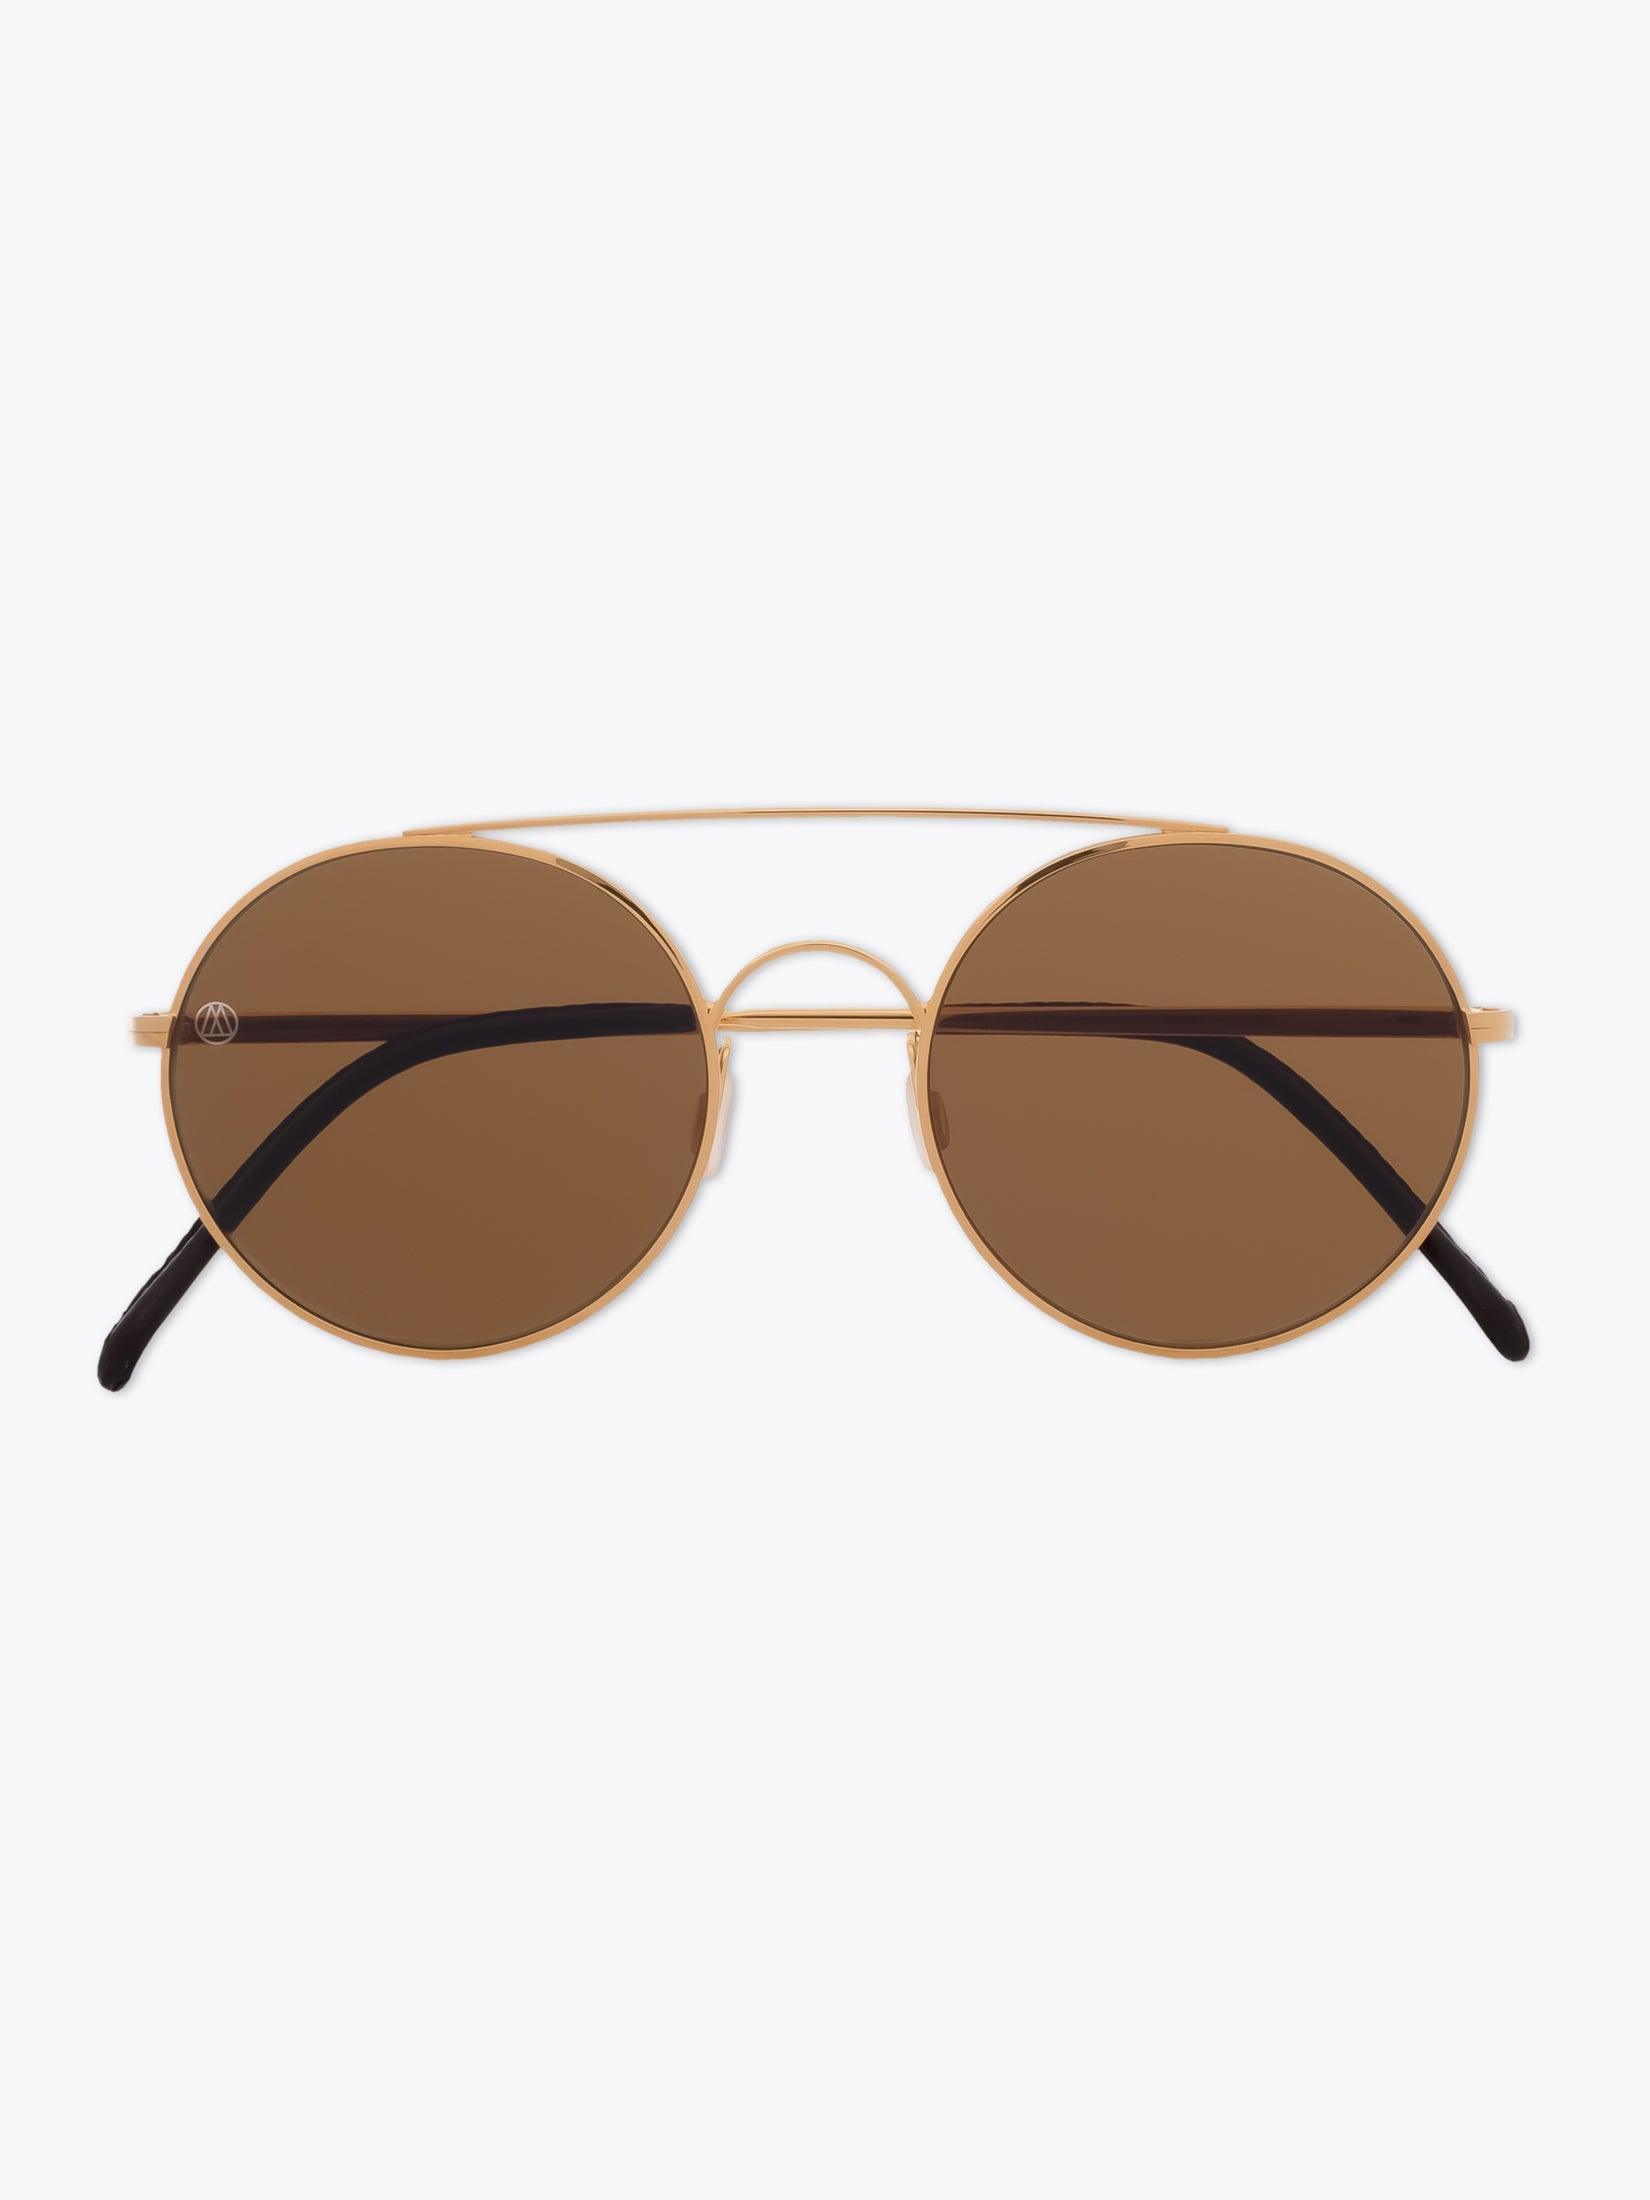 8000 Eyewear 8M6 Gold-Tone Round Sunglasses